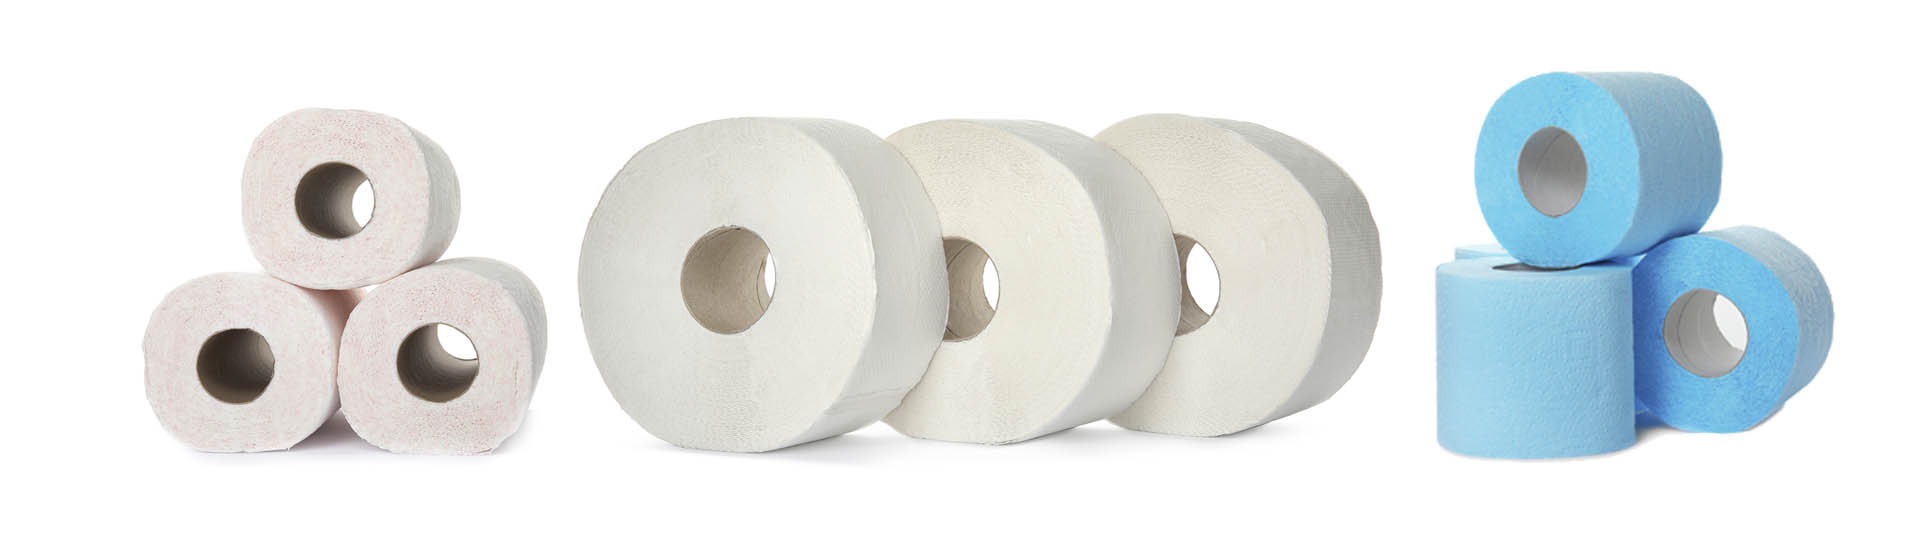 papelmatic-higiene-profesional-oferta-productos-papel-fabricantes-productos